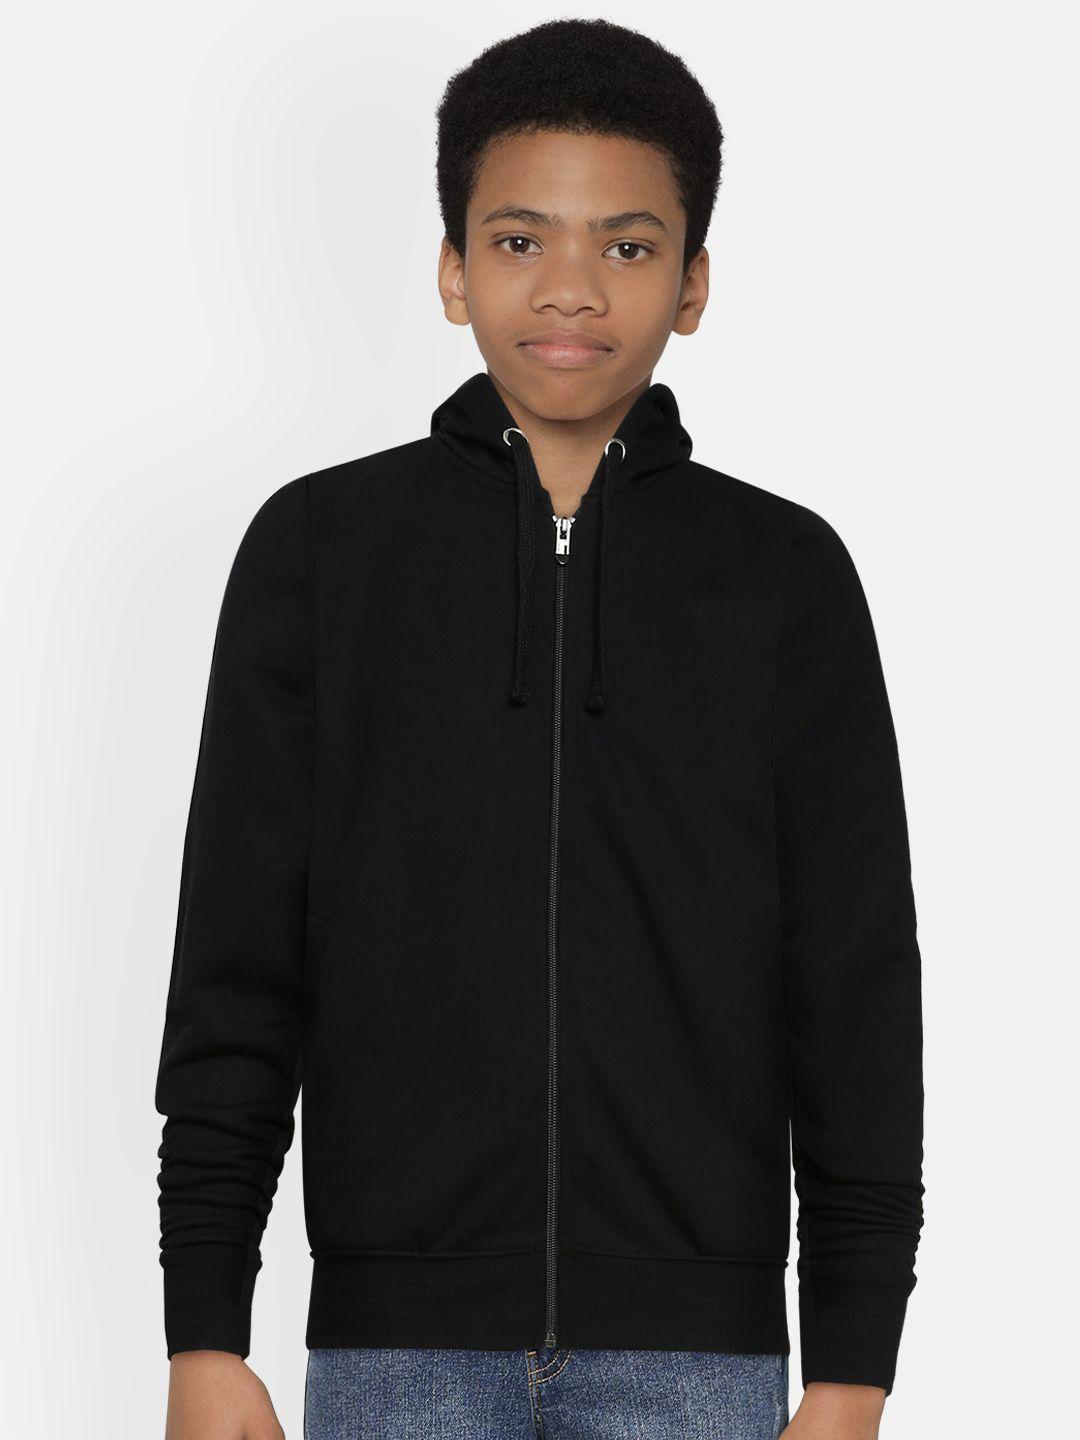 adbucks-boys-black-solid-pure-cotton-hooded-sweatshirt